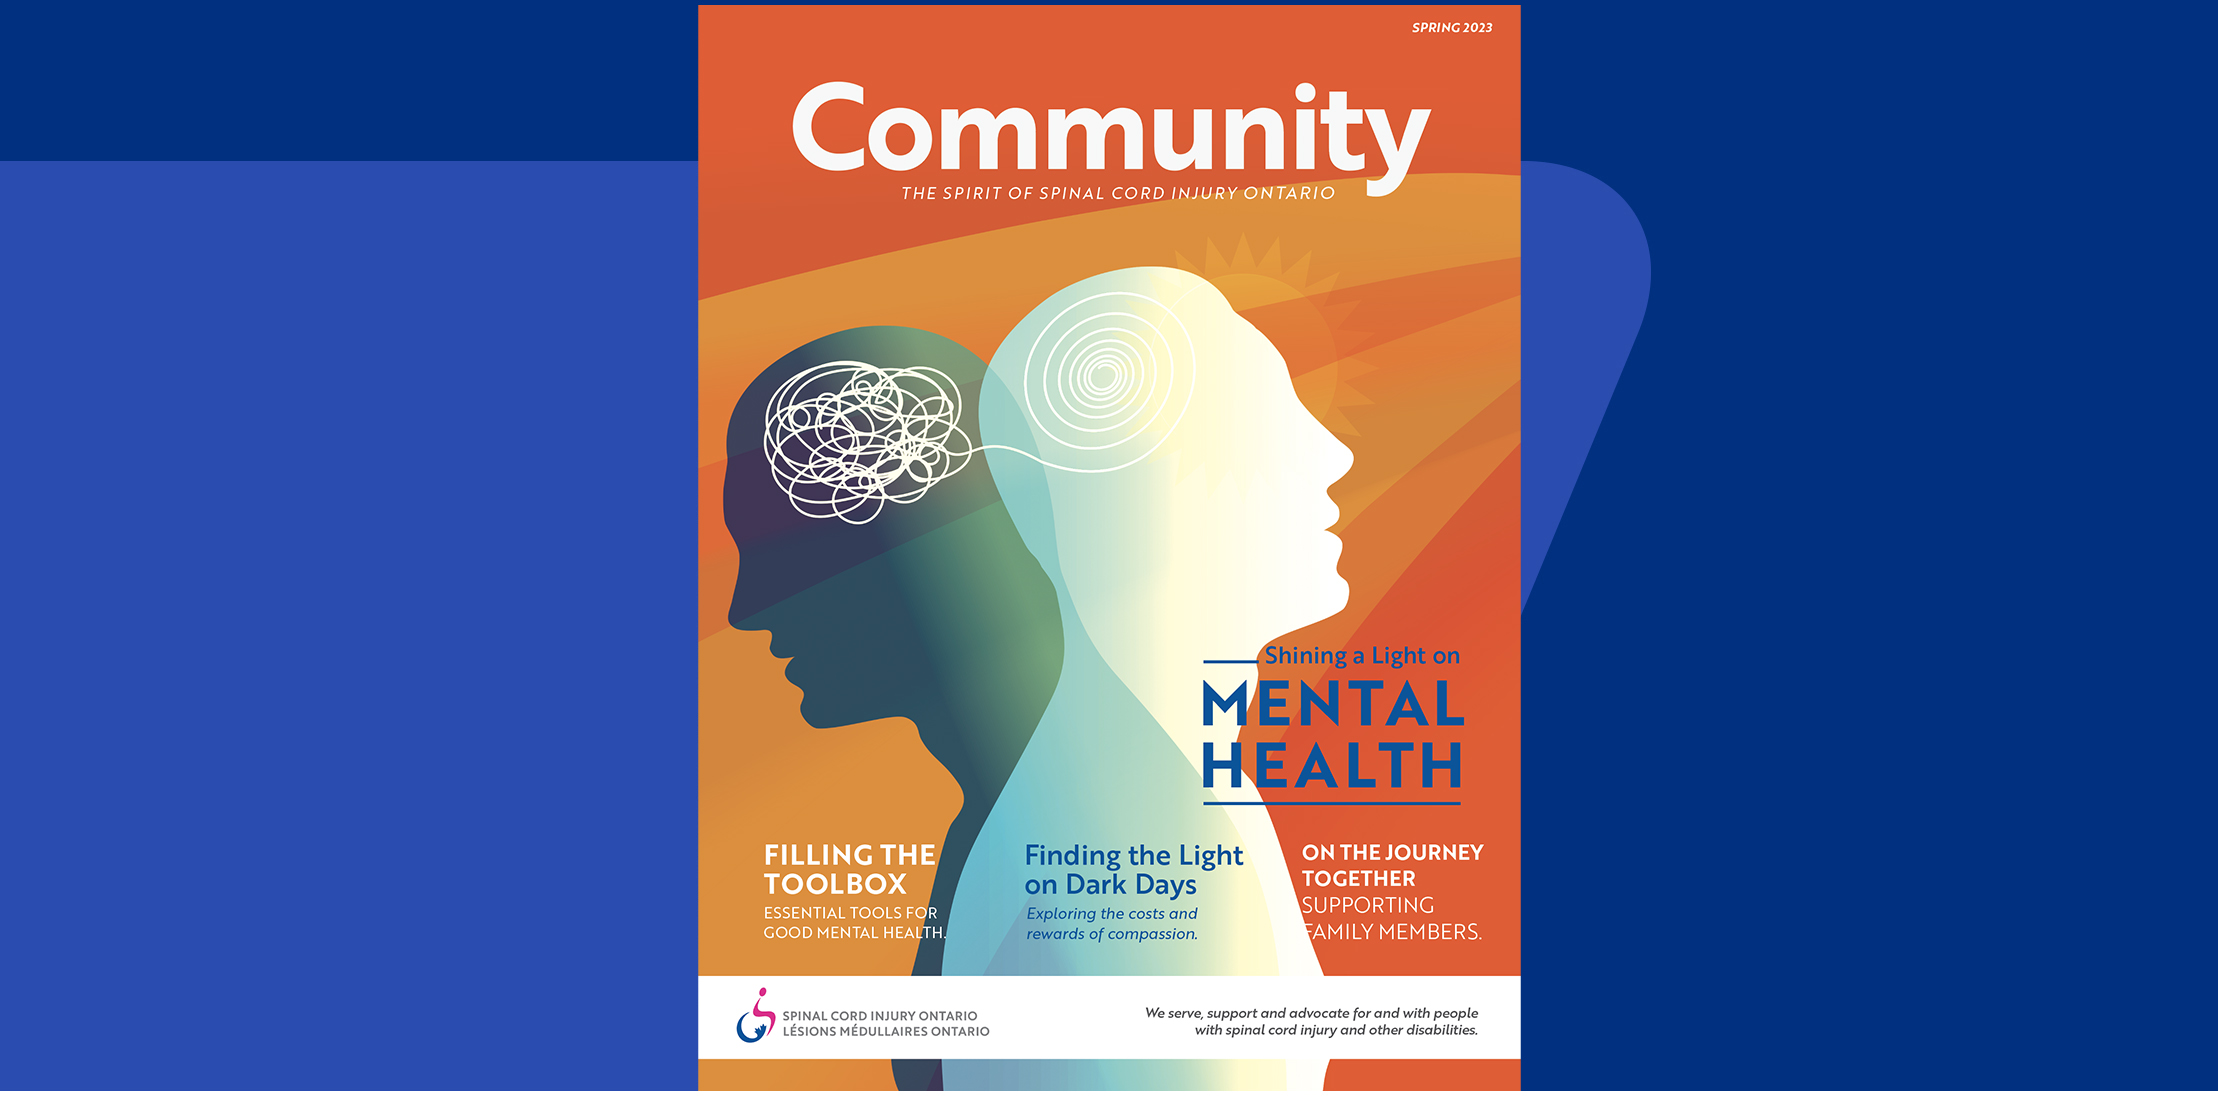 MSpring 2023 cover image depicting an illustration of mental health.